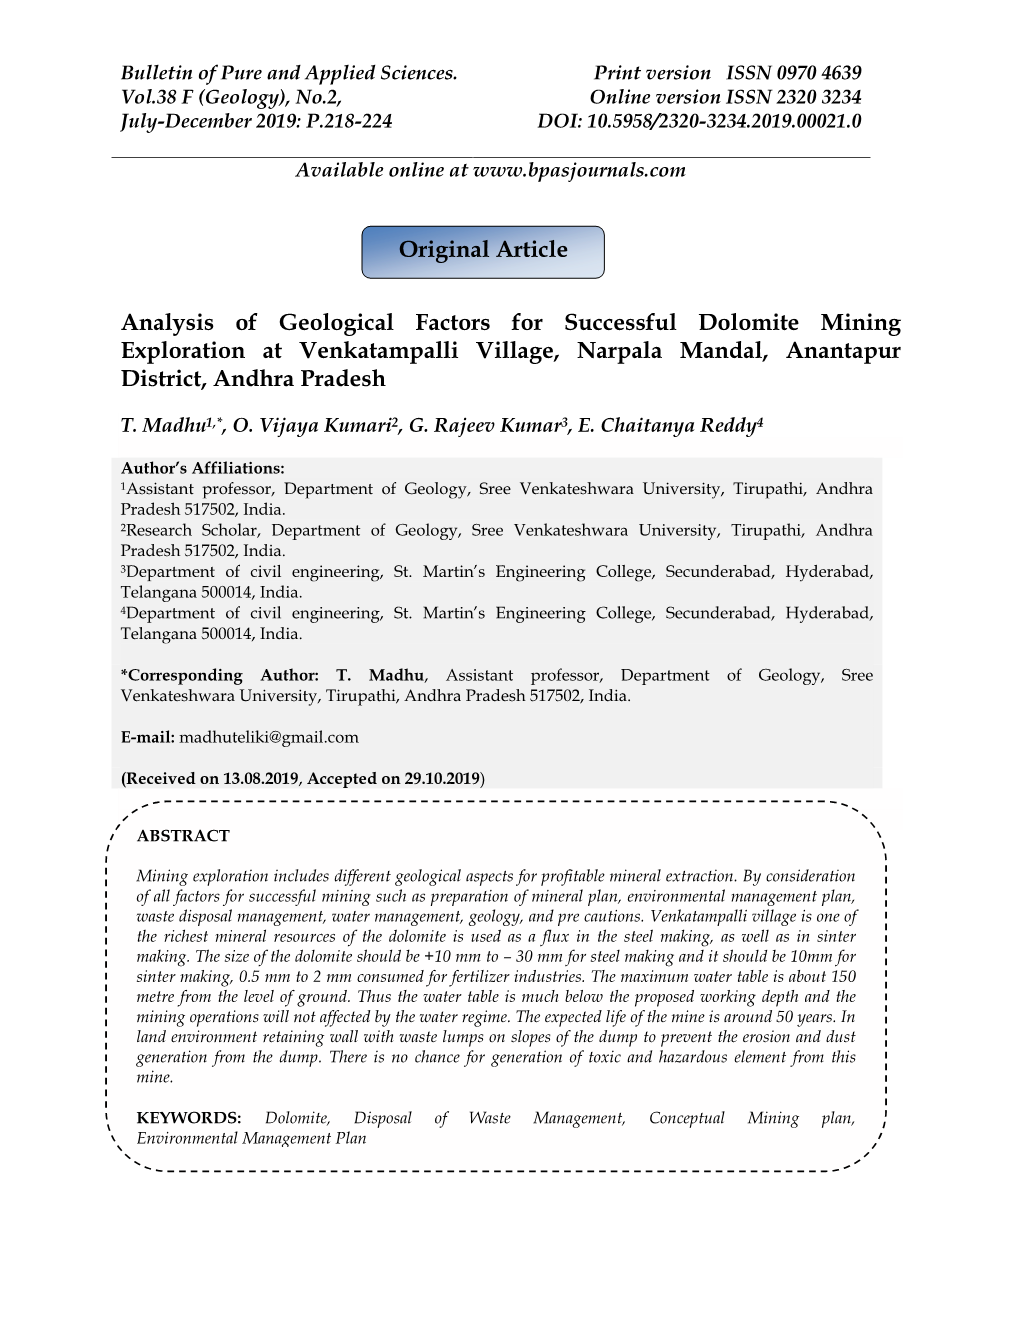 Analysis of Geological Factors for Successful Dolomite Mining Exploration at Venkatampalli Village, Narpala Mandal, Anantapur District, Andhra Pradesh